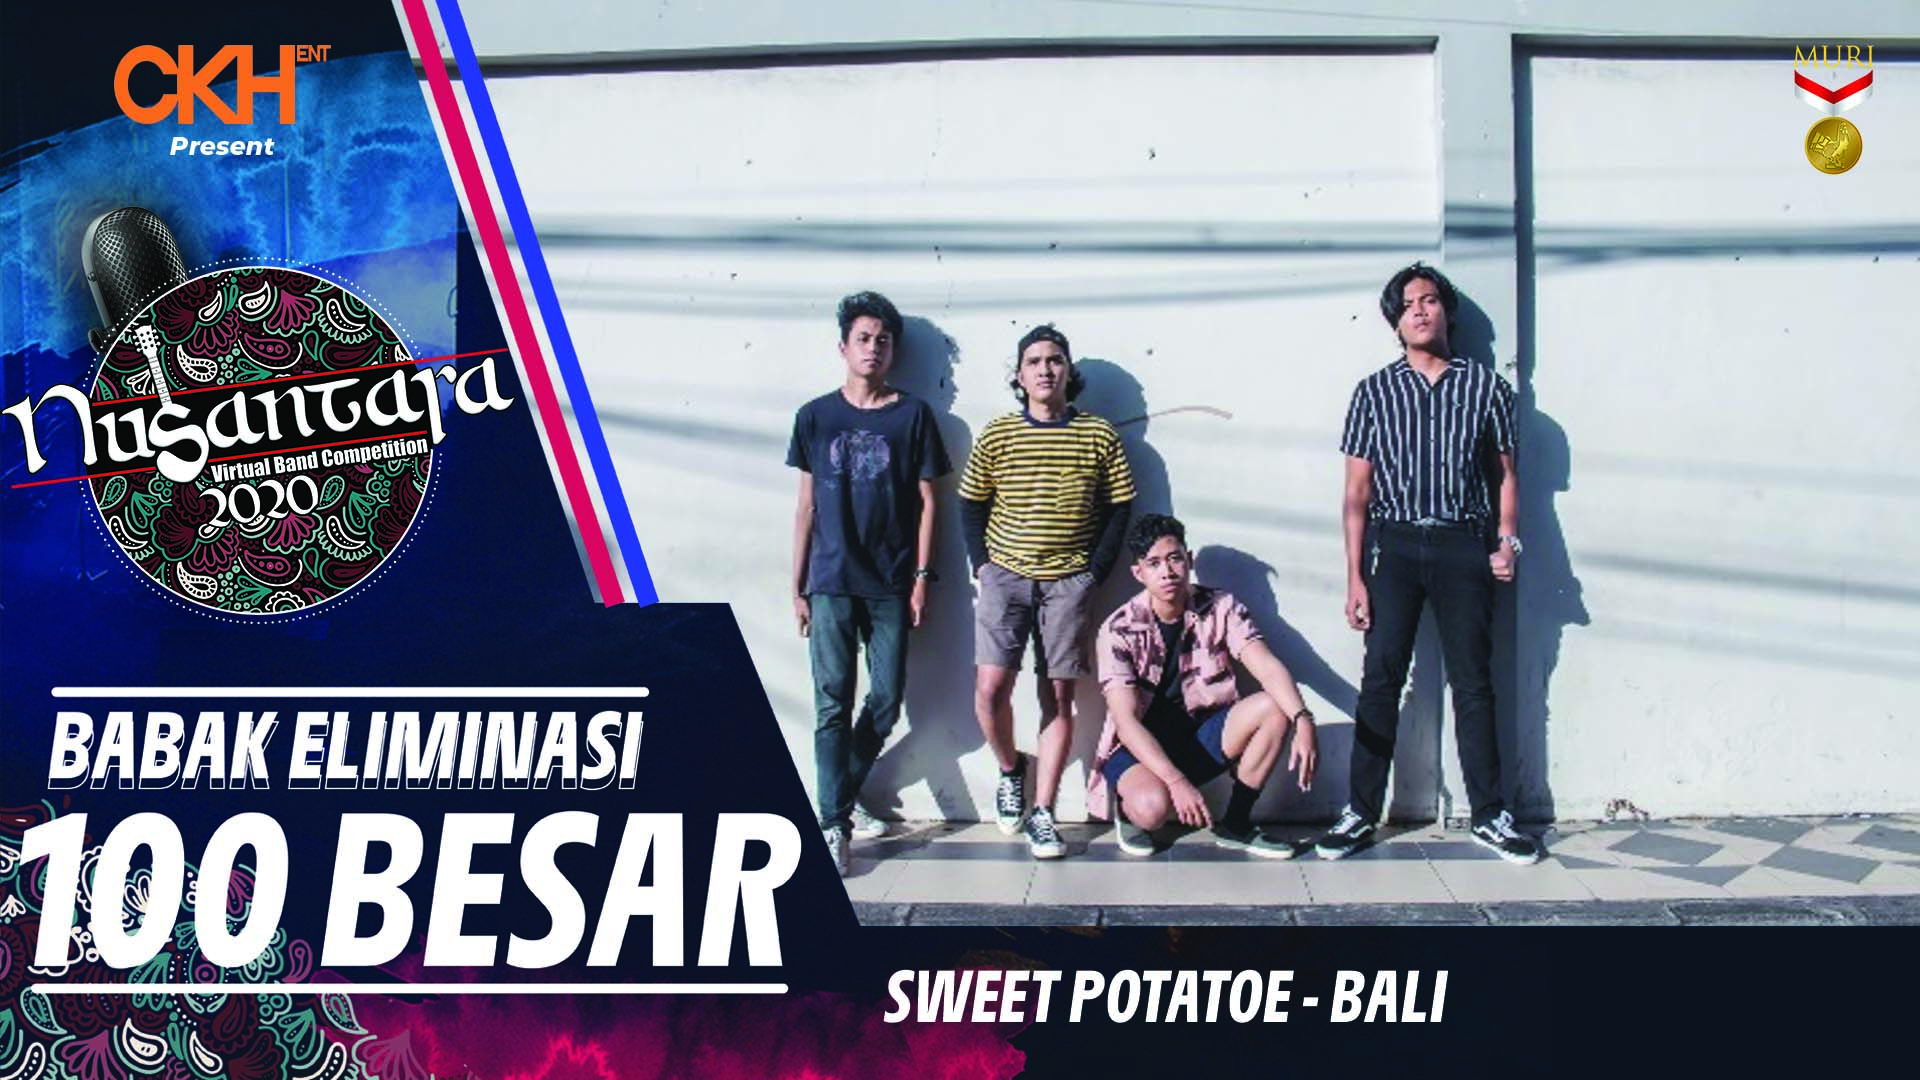 Sweet Potatoes - Eliminasi 100 Besar Nusantara Virtual Band Competition